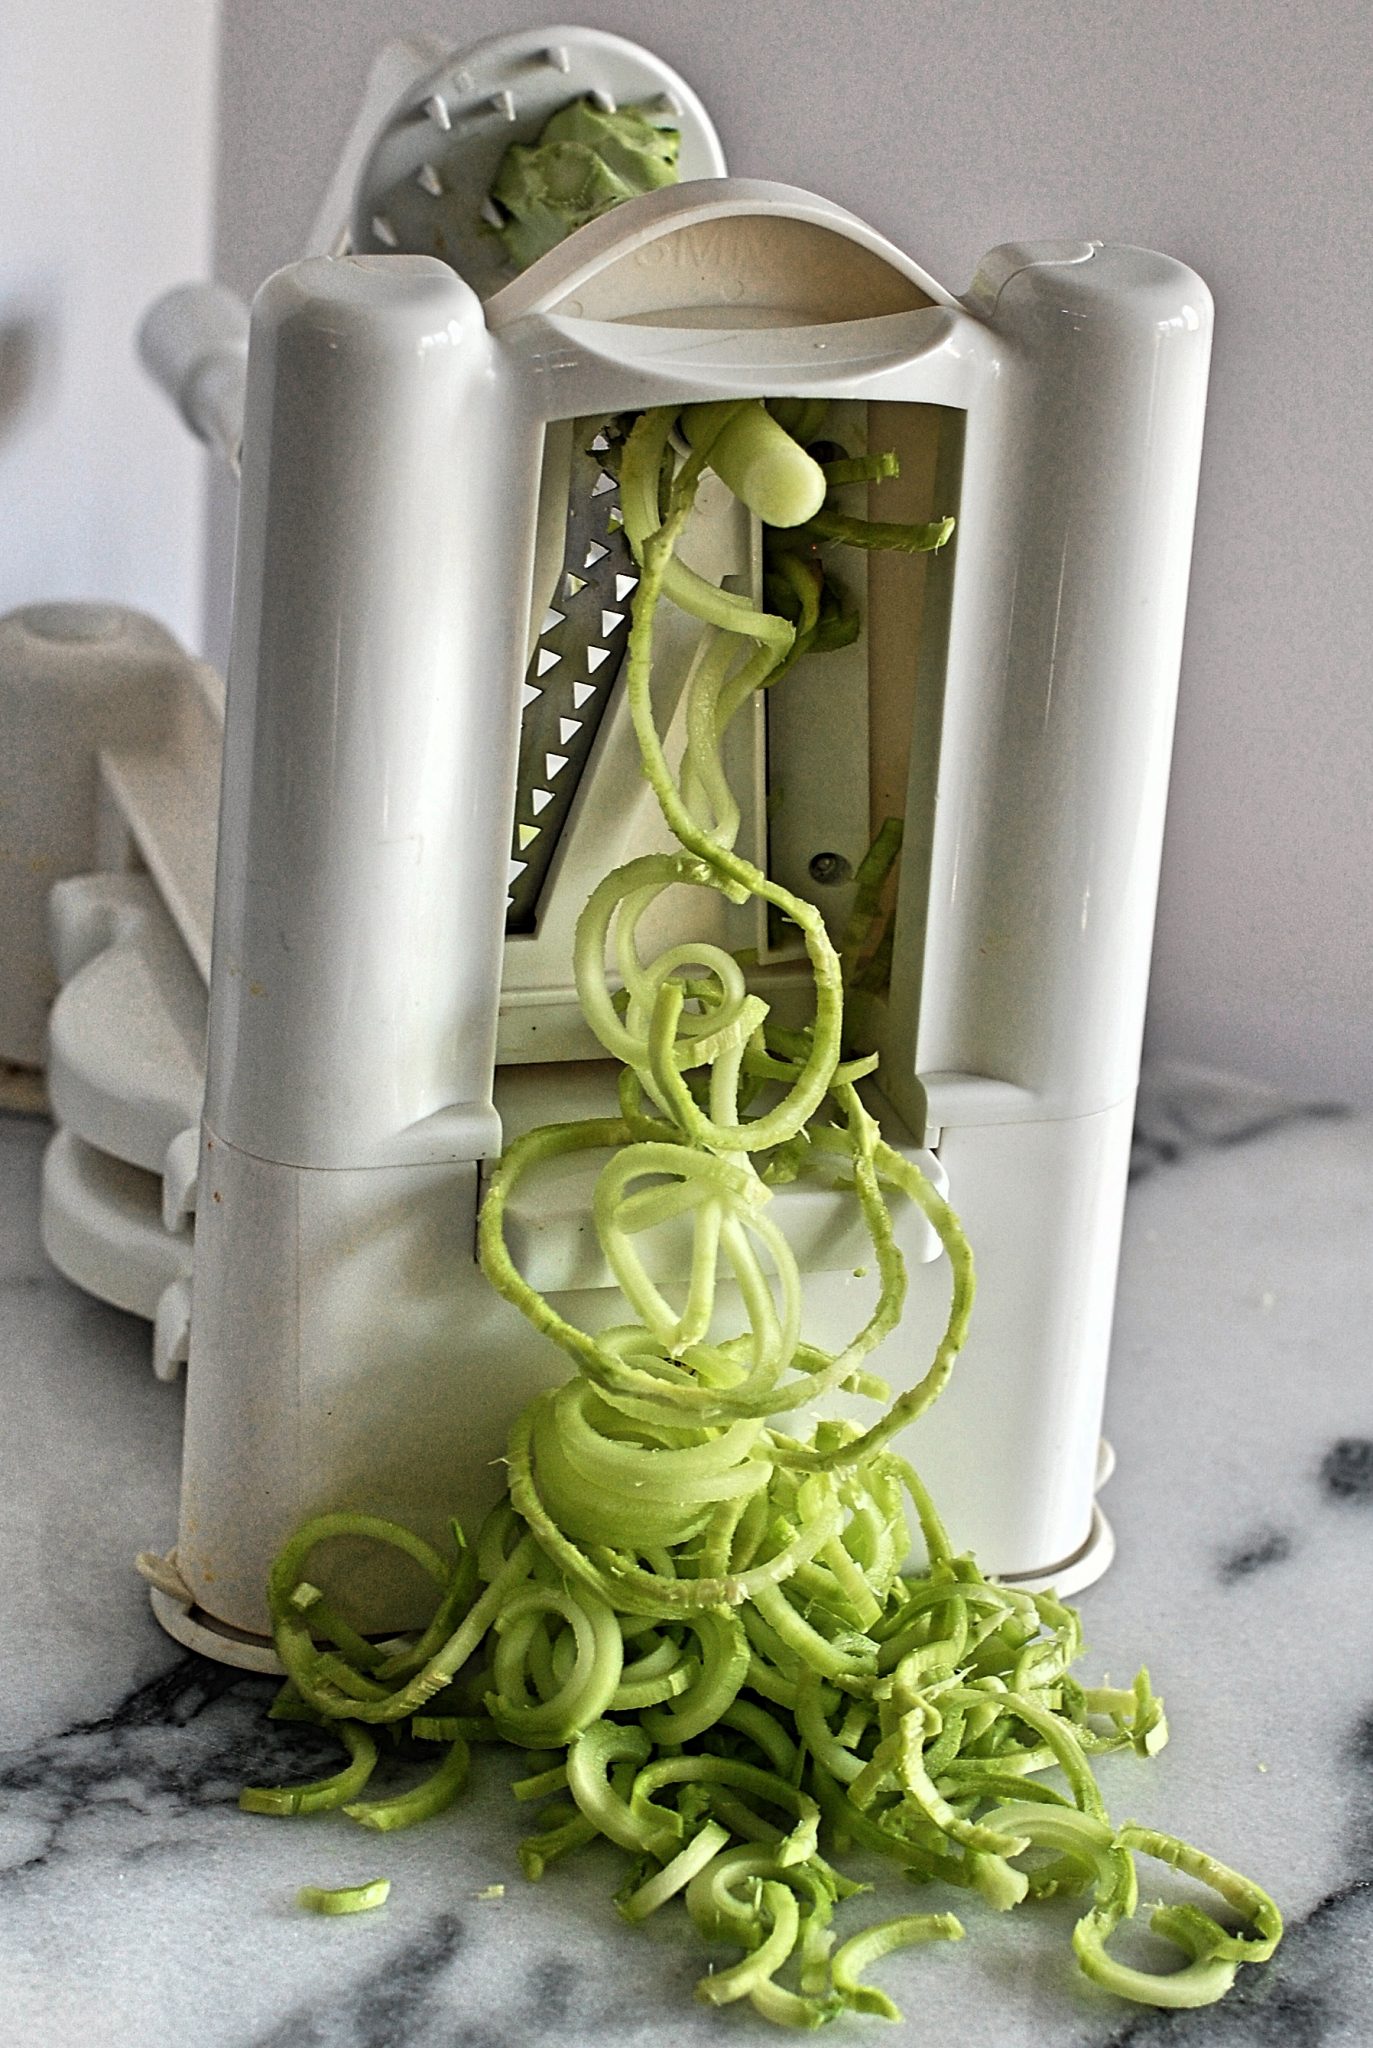 Broccoli Spirals Salad How To Make